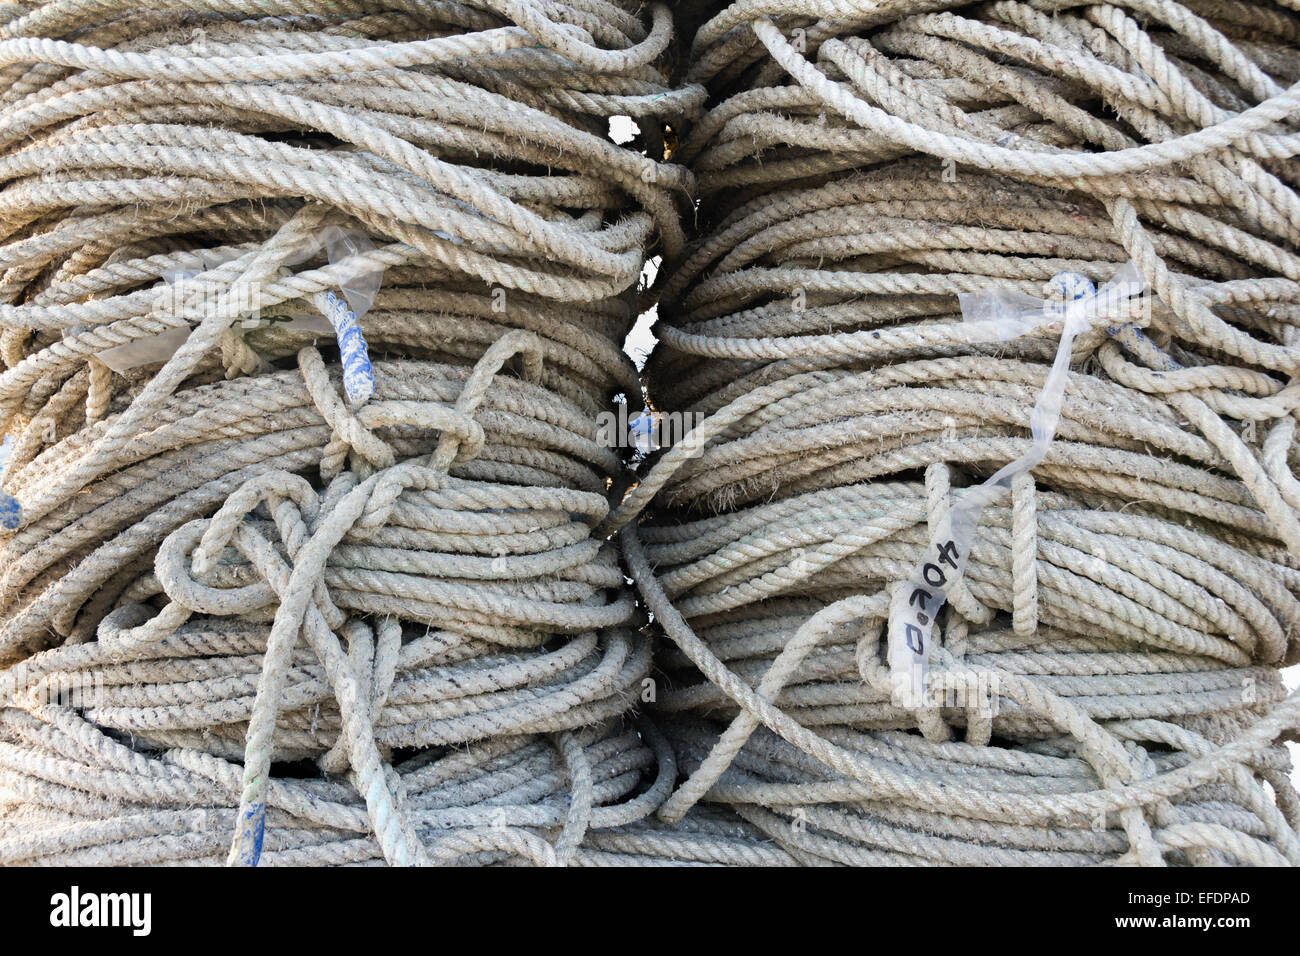 Rope coils, Naruto Harbor, Shikoku Island, Japan Stock Photo